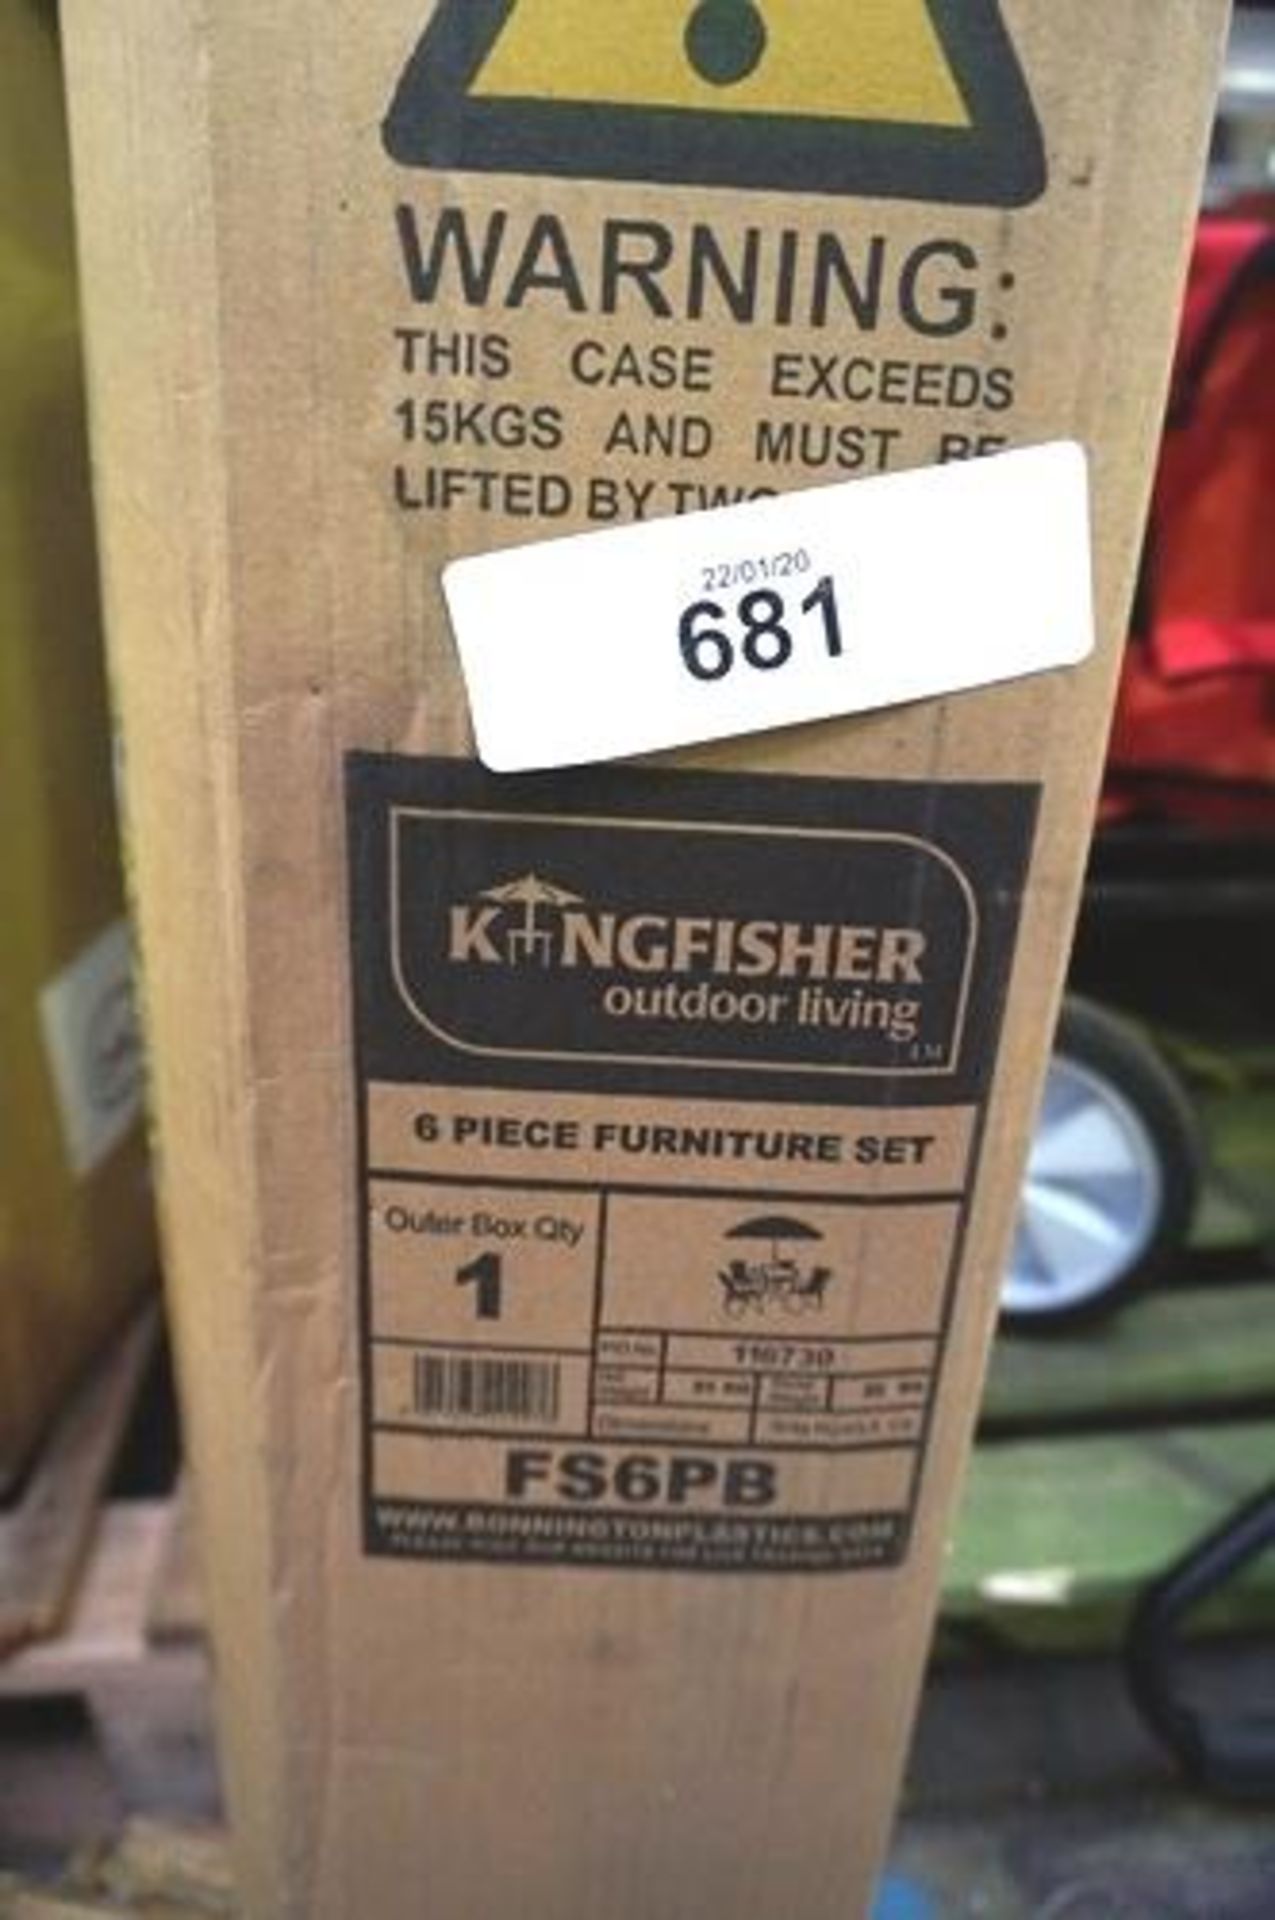 1 x Kingfisher 6 piece garden furniture set, model FS6PB - New (GSF7)